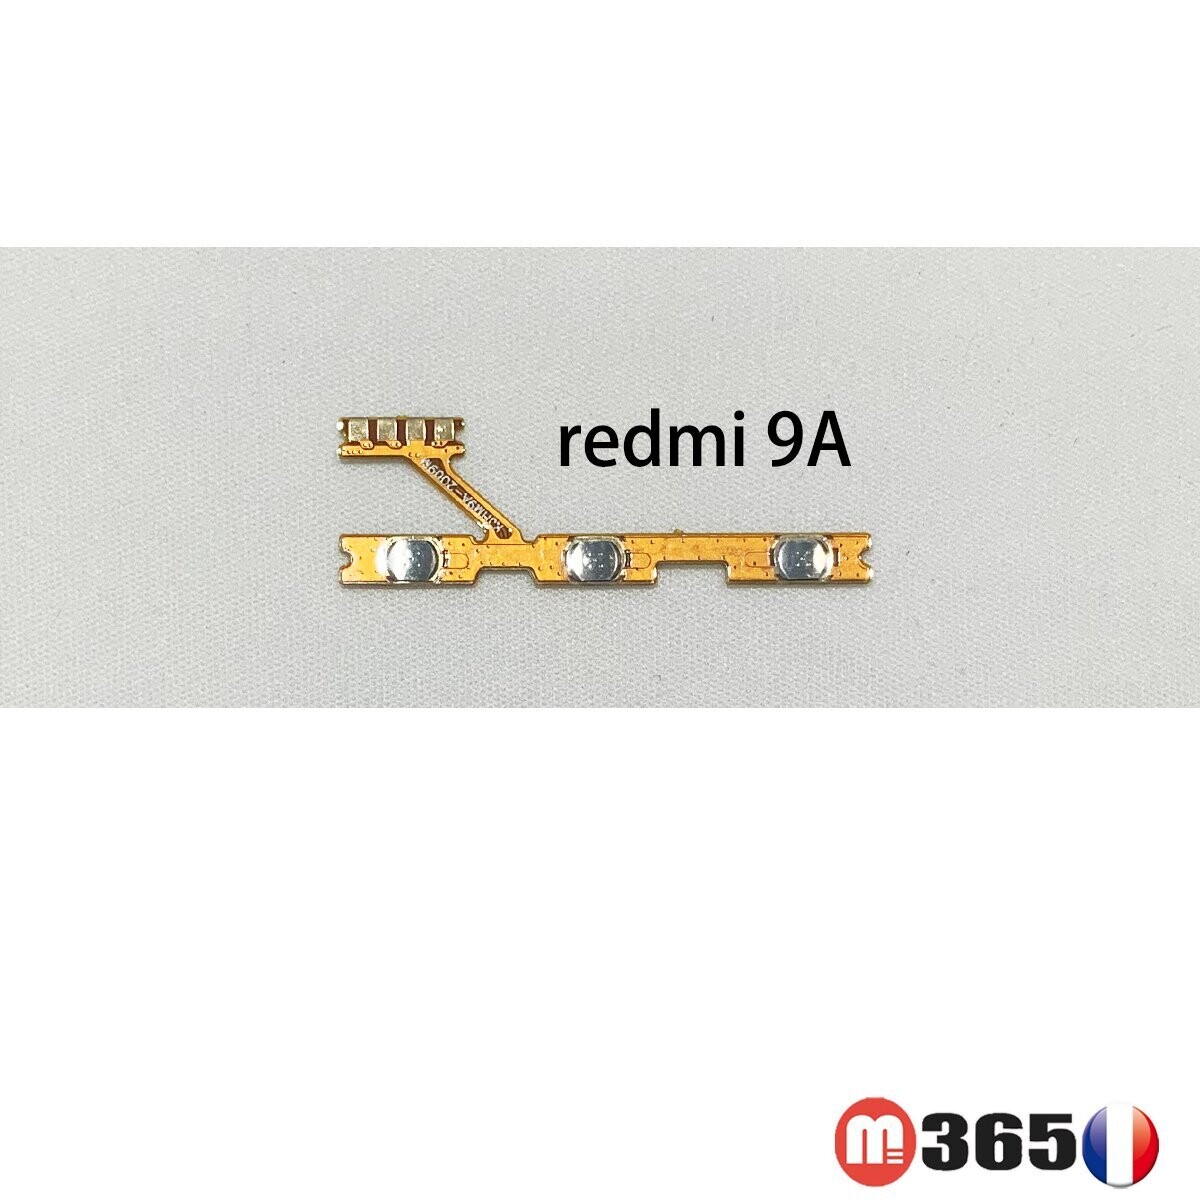 redmi 9A 9C nappe bouton on/off volume demarrage interrupteur nappe